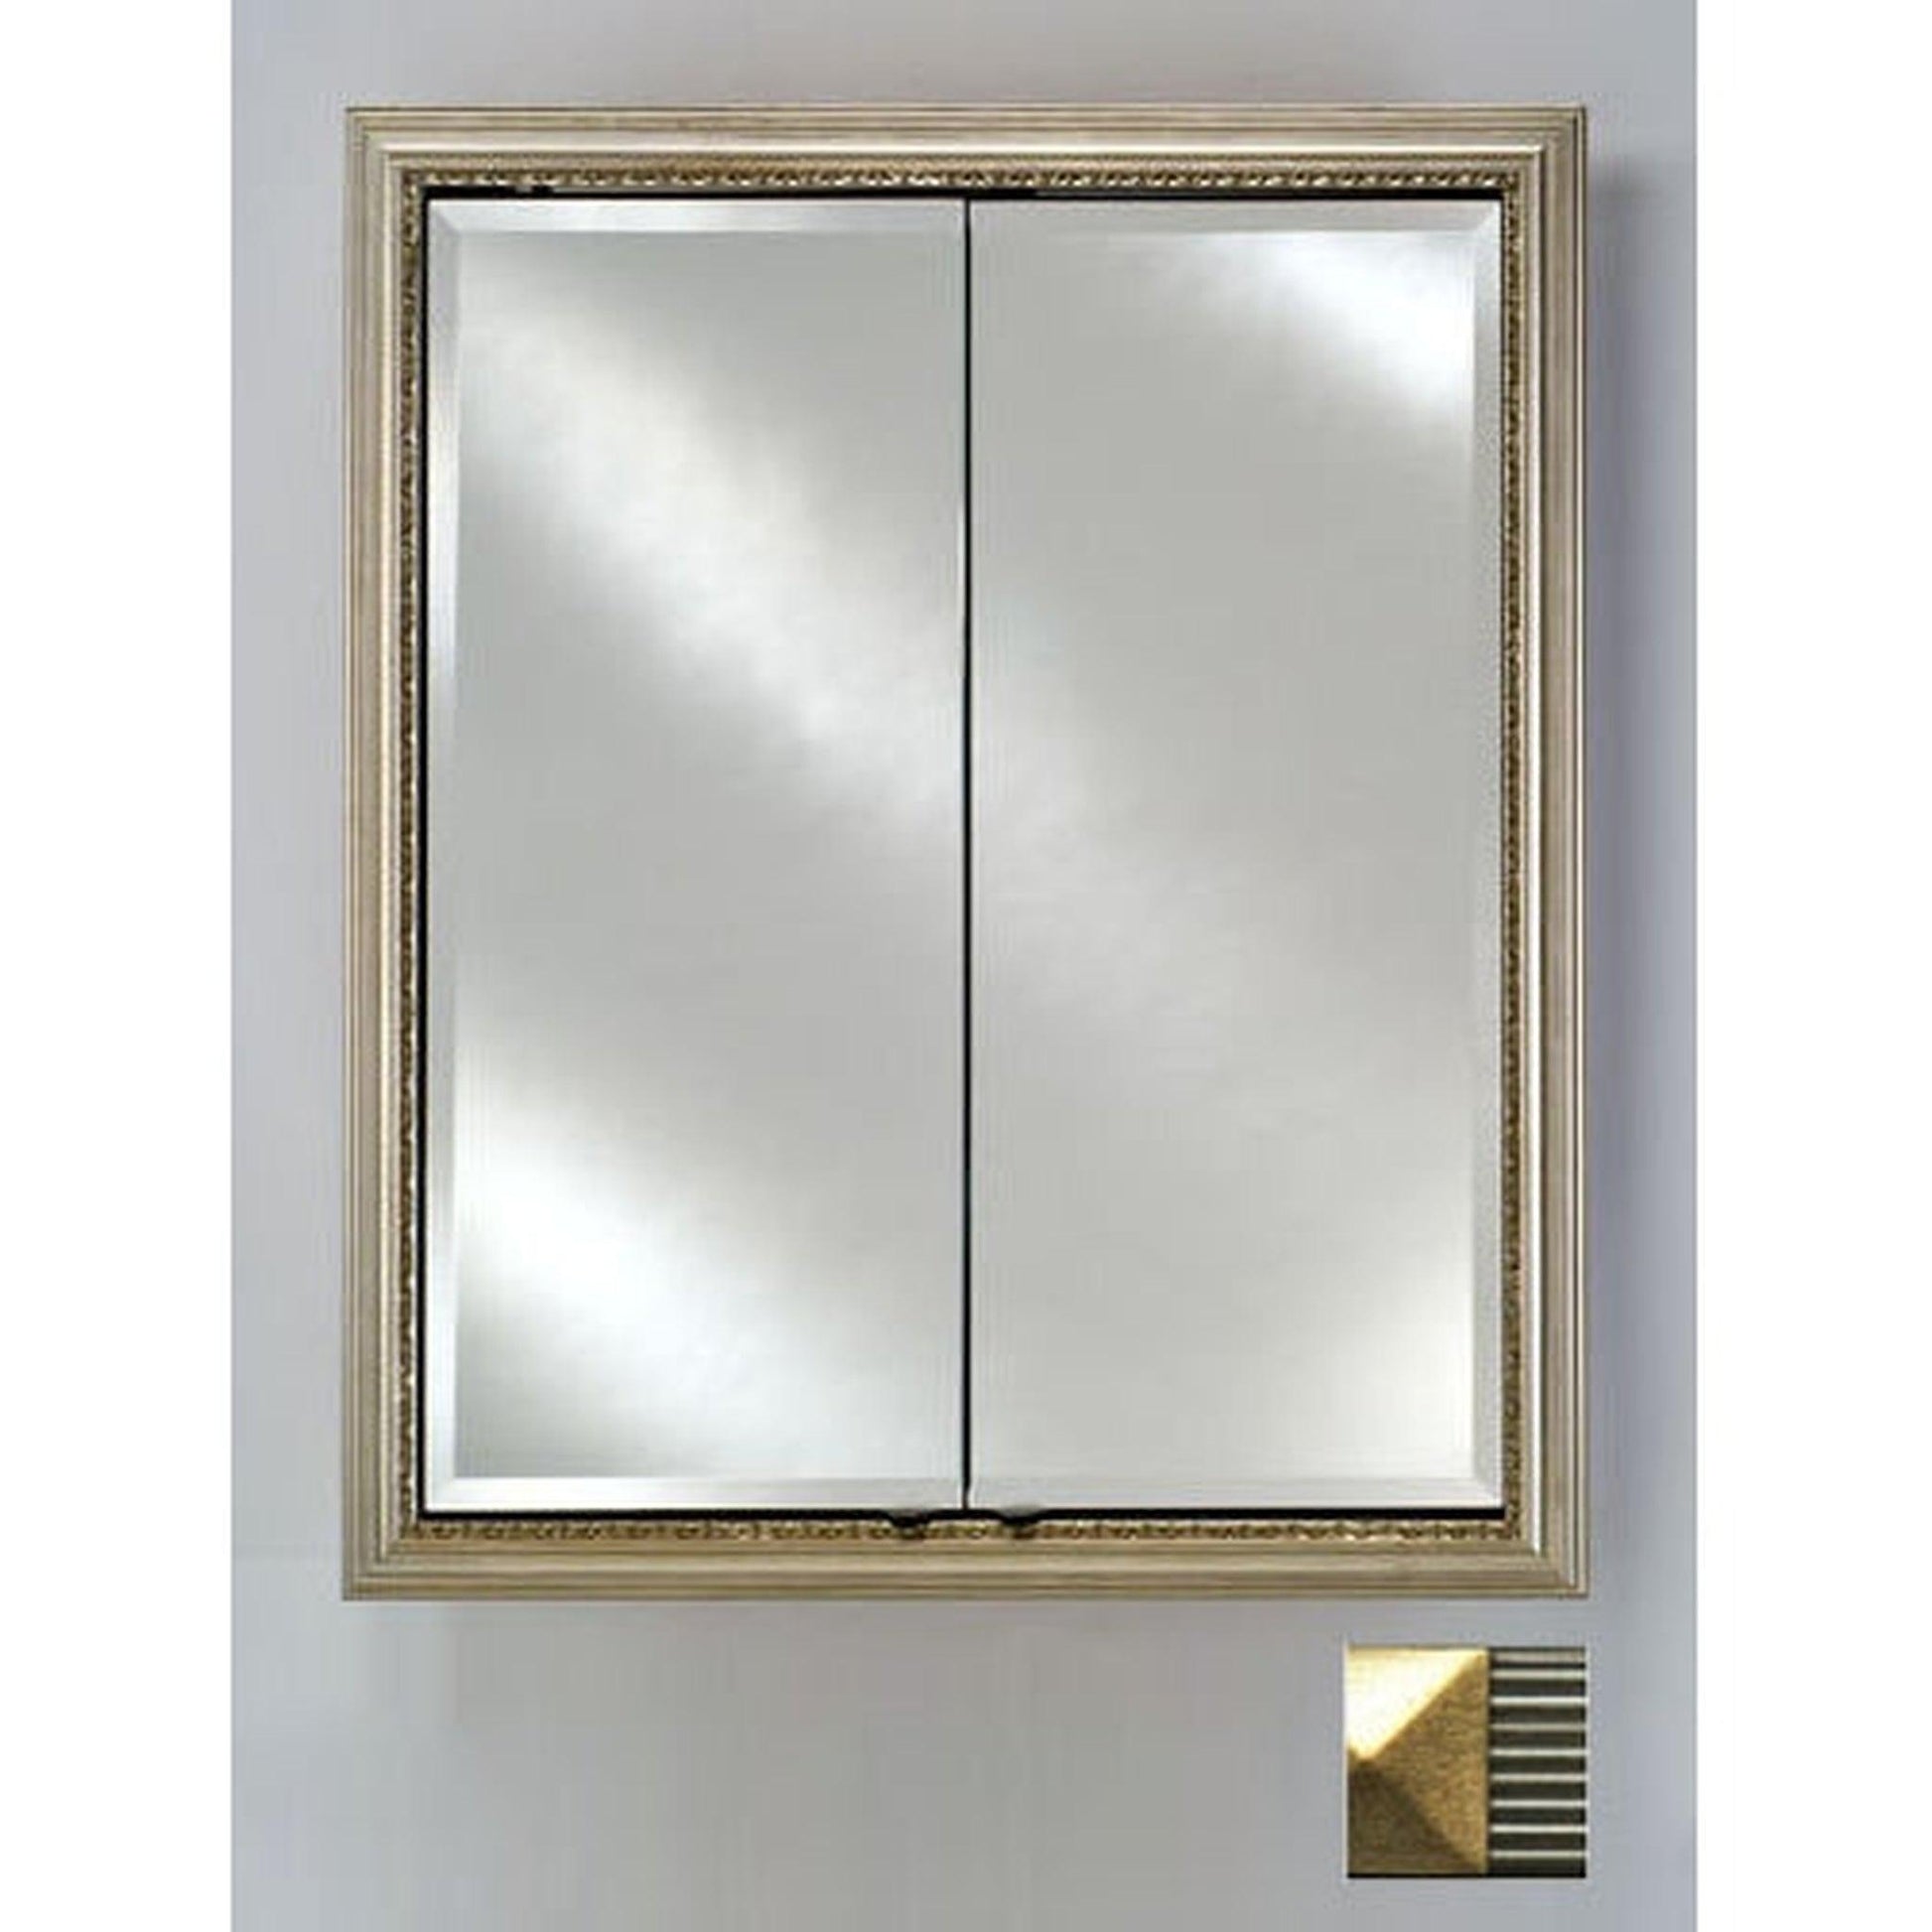 Afina Signature 24" x 30" Meridian Antique Silver with Antique Gold Caps Recessed Double Door Medicine Cabinet With Beveled Edge Mirror